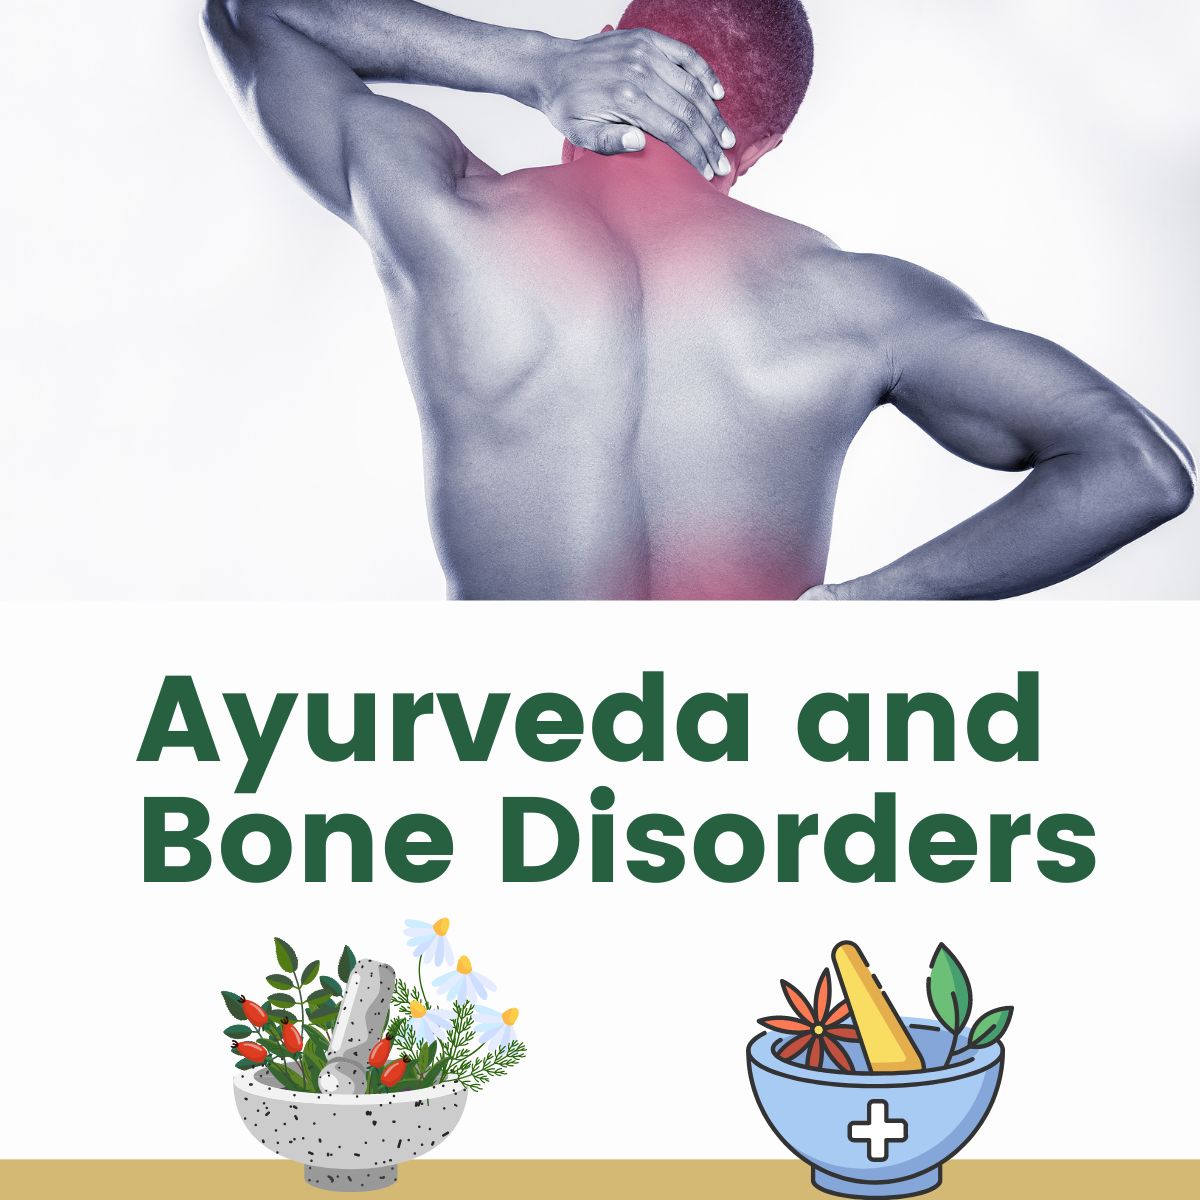 How Does Ayurveda Treat Bone Disorders?